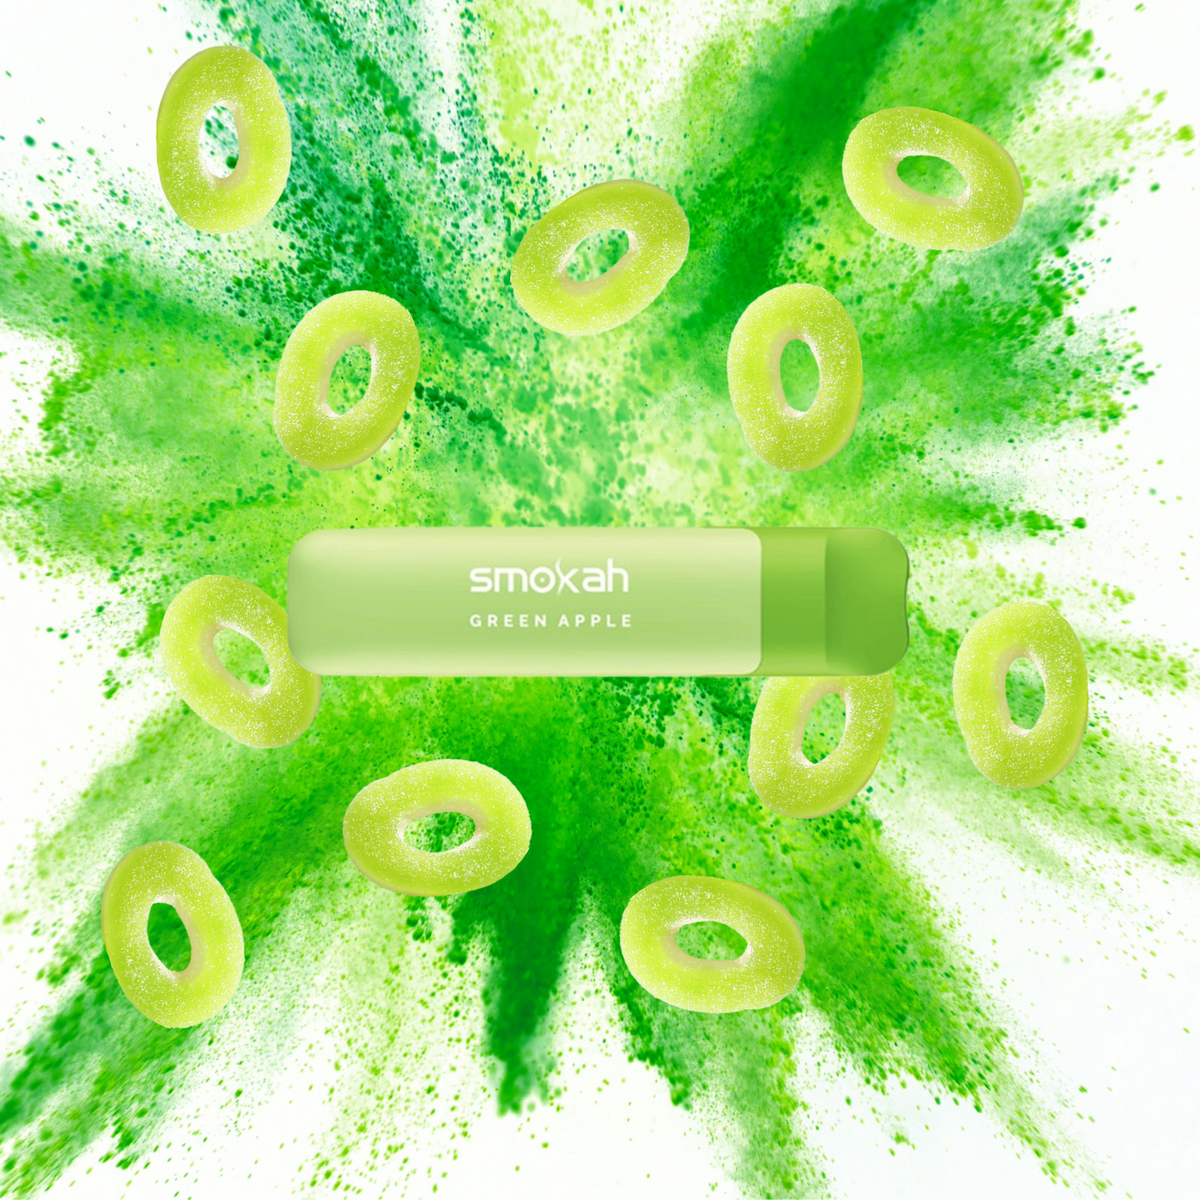 Smokah GLAMEE Green Apple "Grüner Apfel" 10er Packung / Display (Sparset)